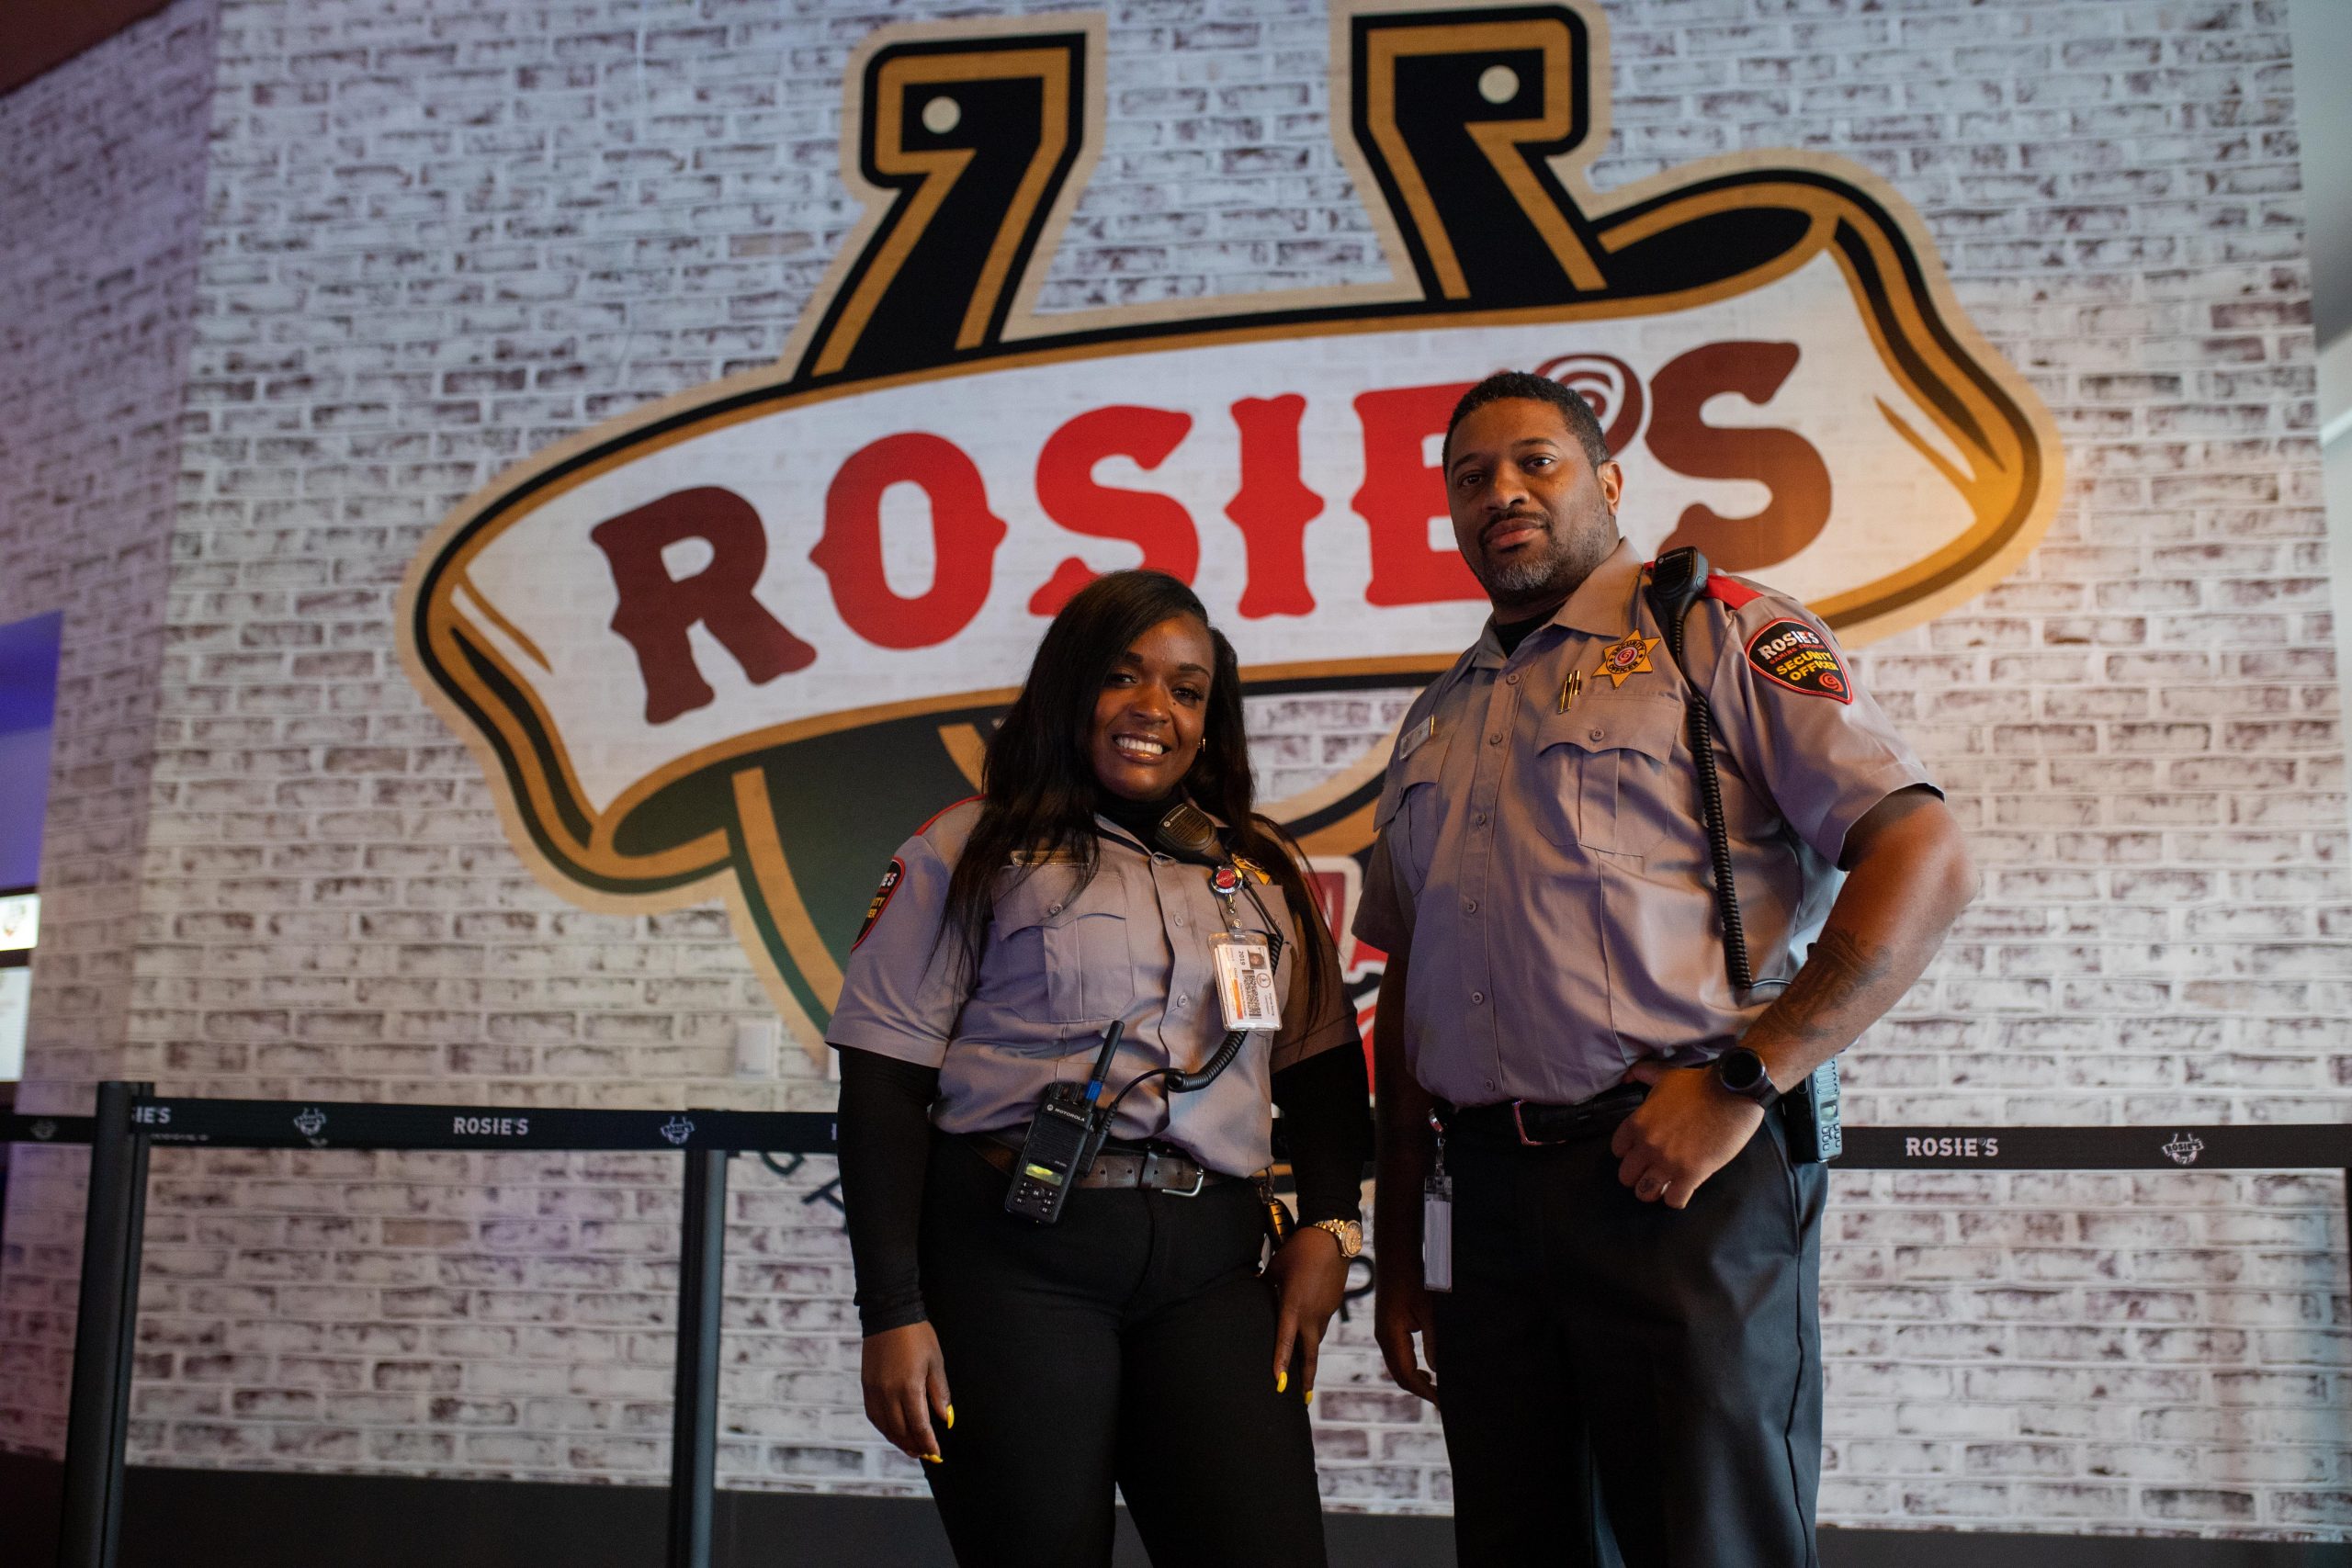 Rosies security officers